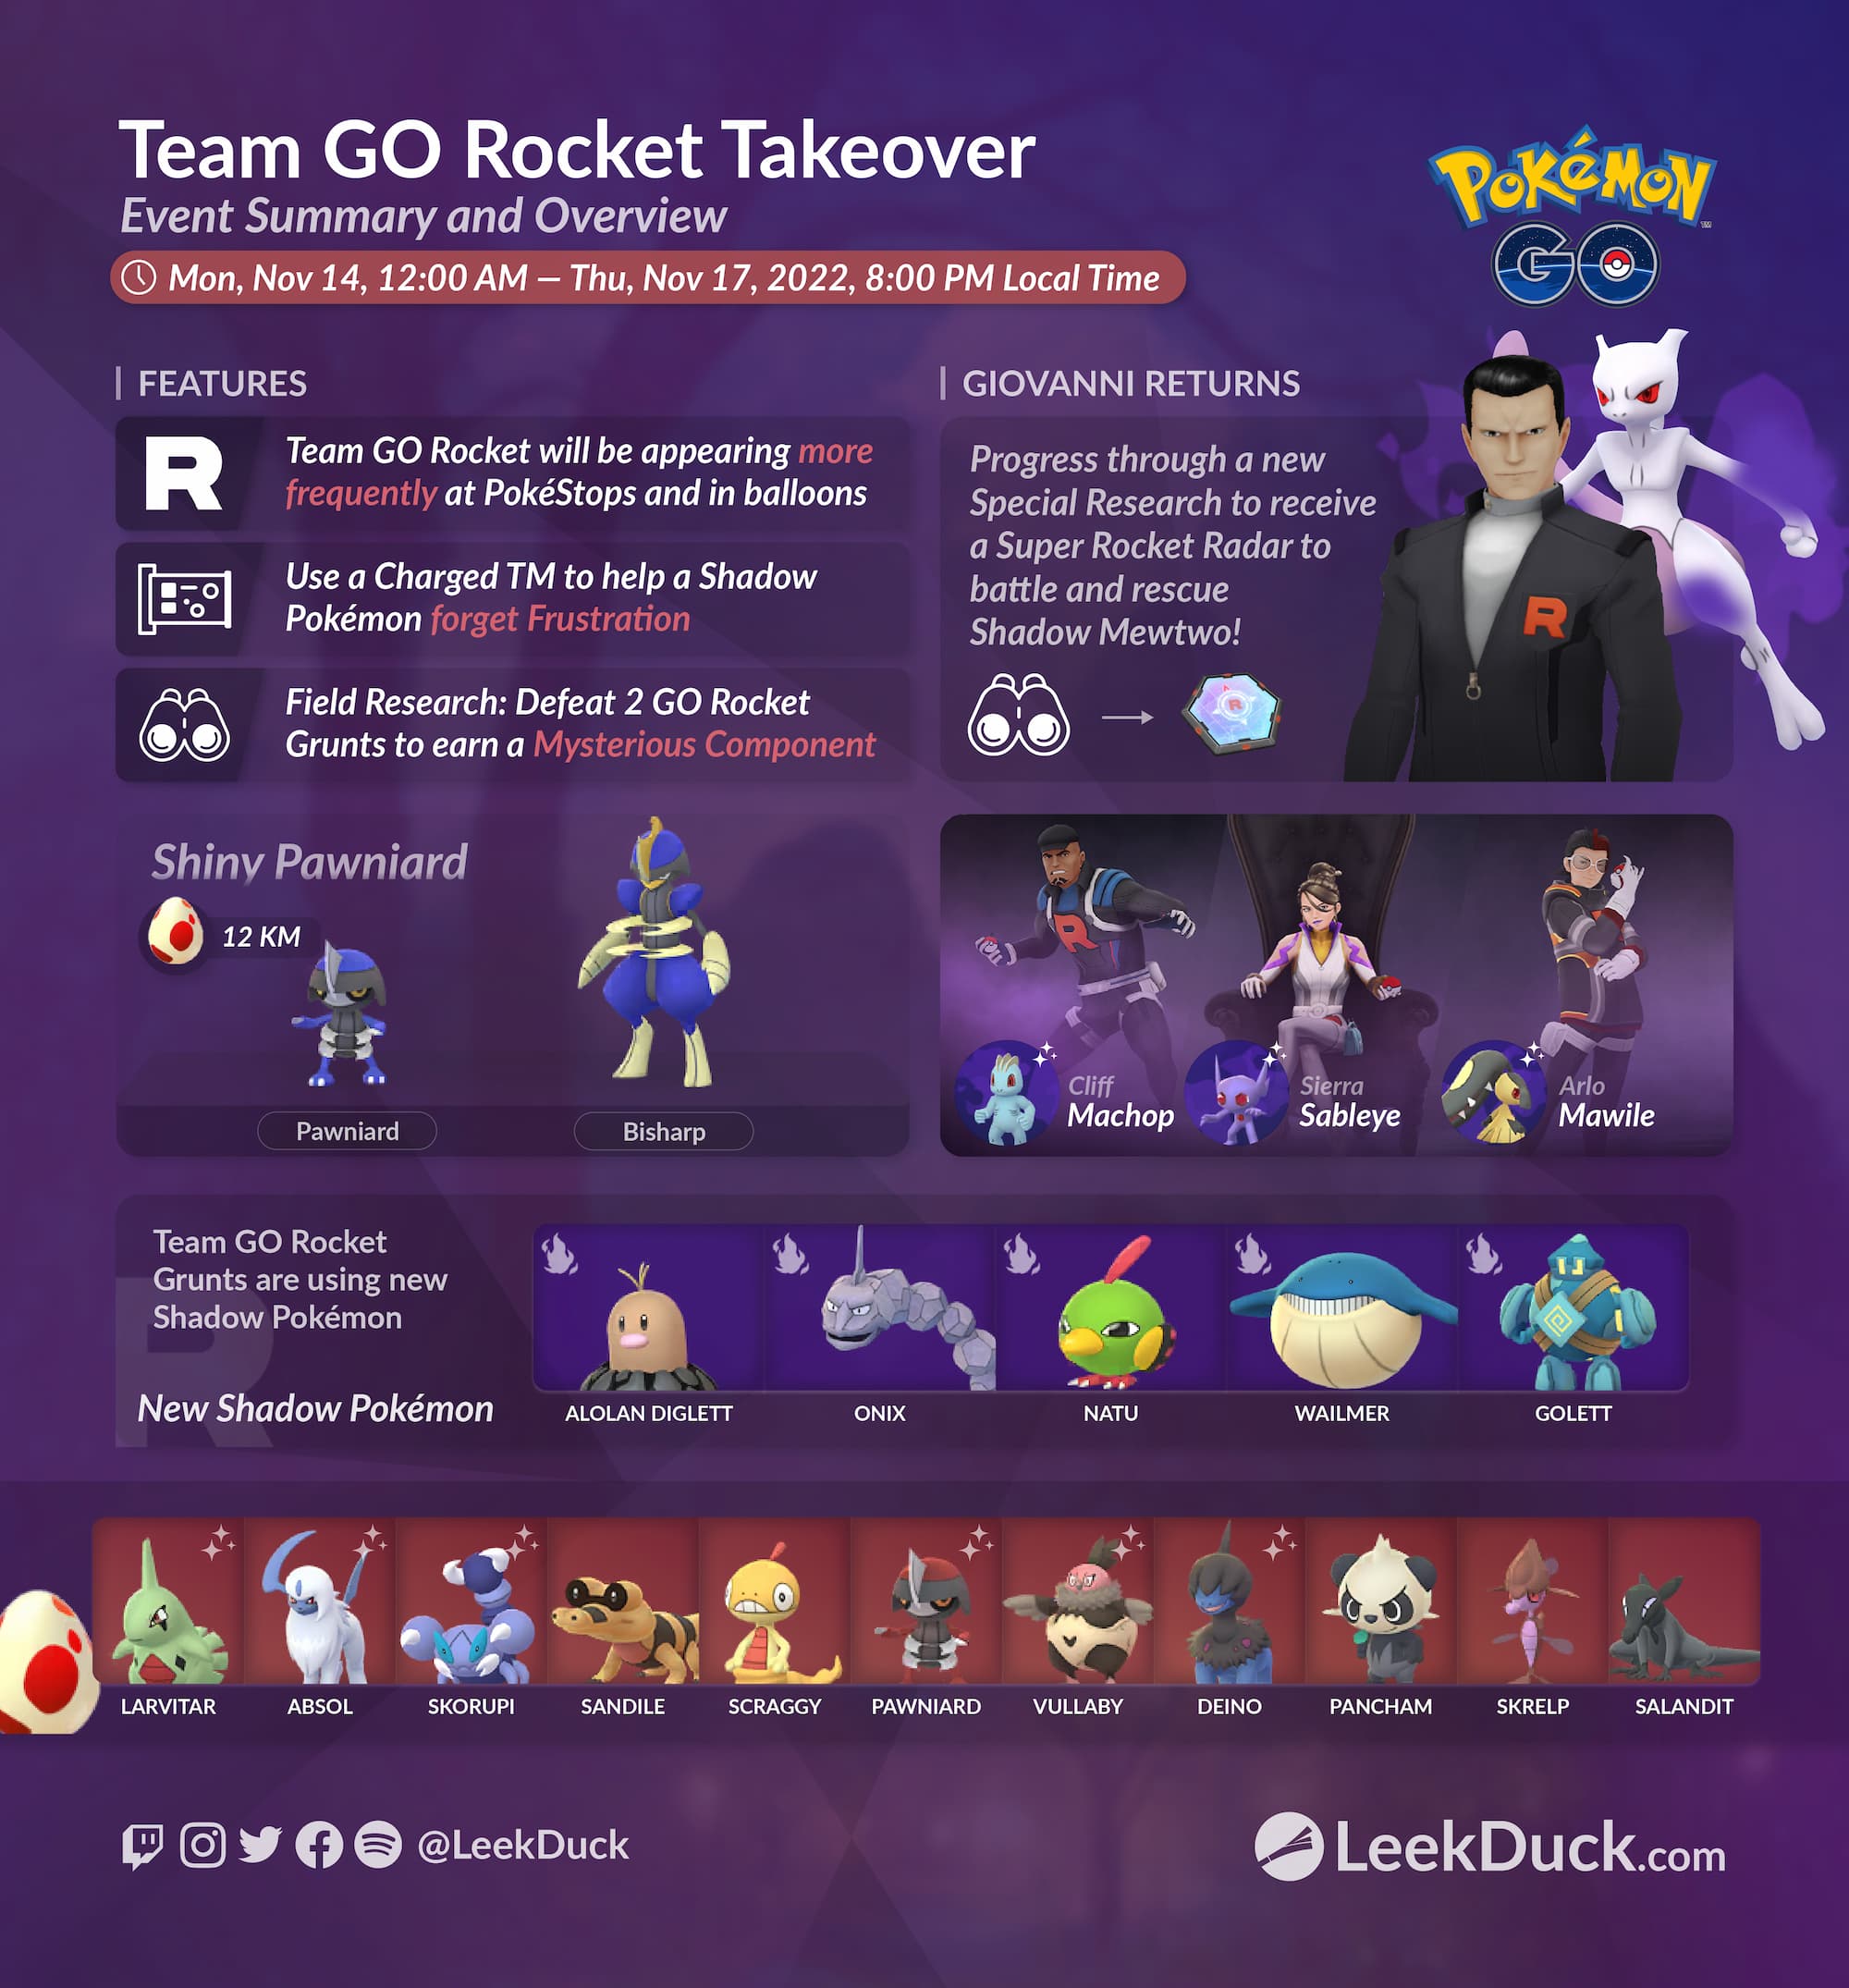 Team GO Rocket Takeover Leek Duck Pokémon GO News and Resources